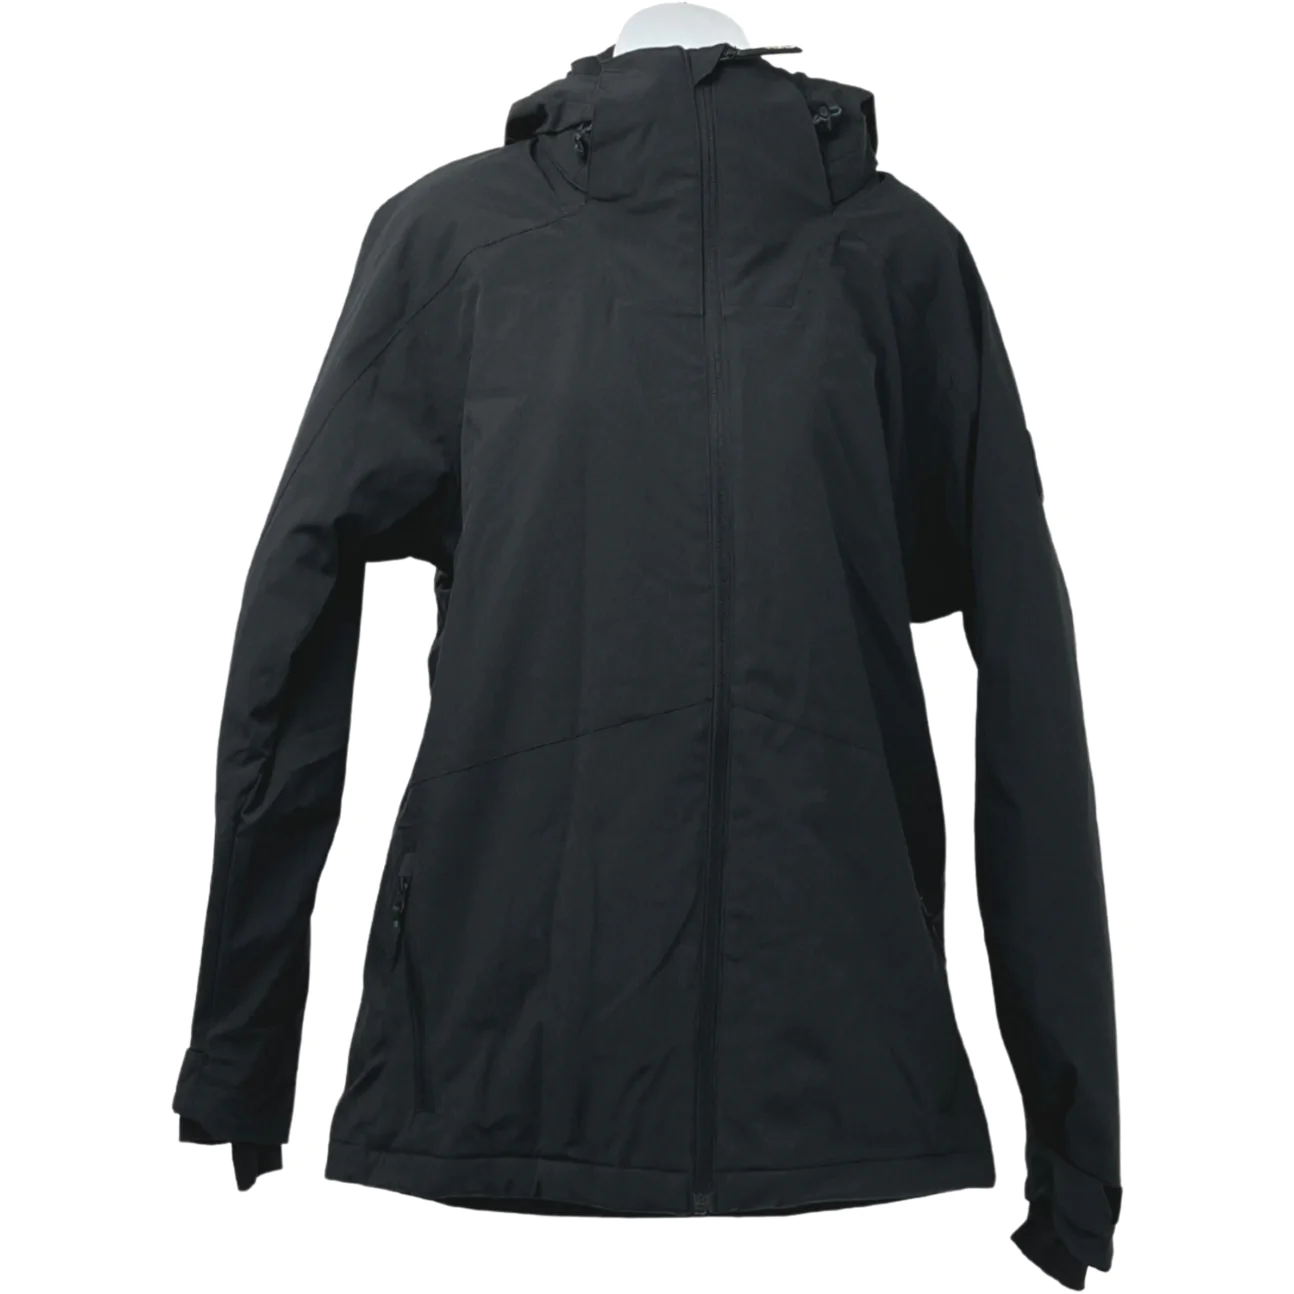 O'Neill Men's Winter Jacket / Charcoal / Ski Jacket / Size Small